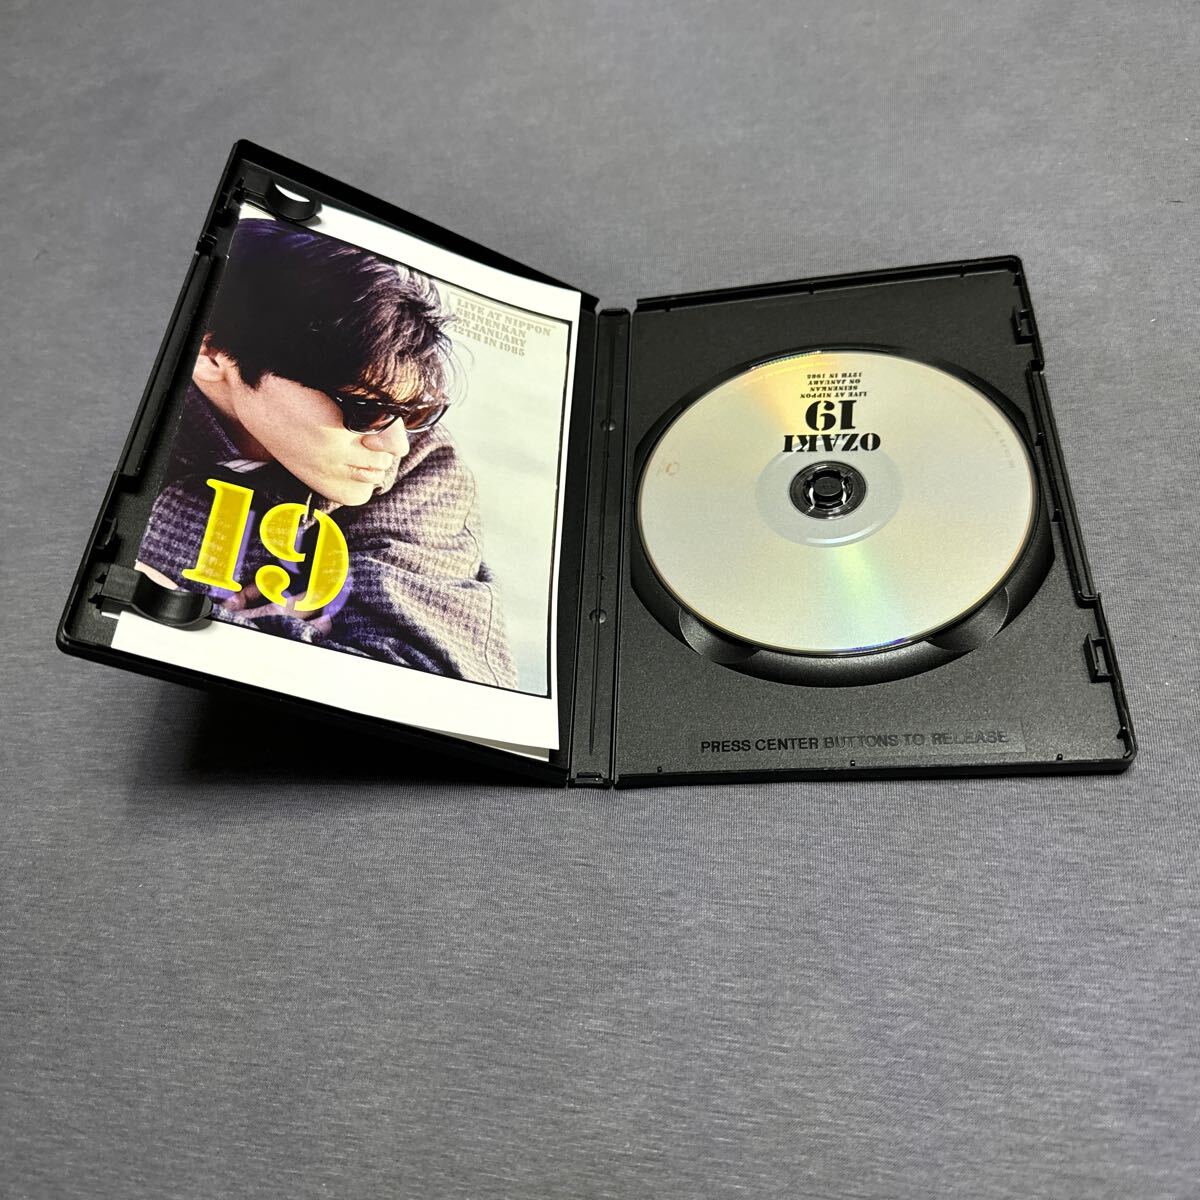 OZAKI19 [DVD] прекрасный товар 